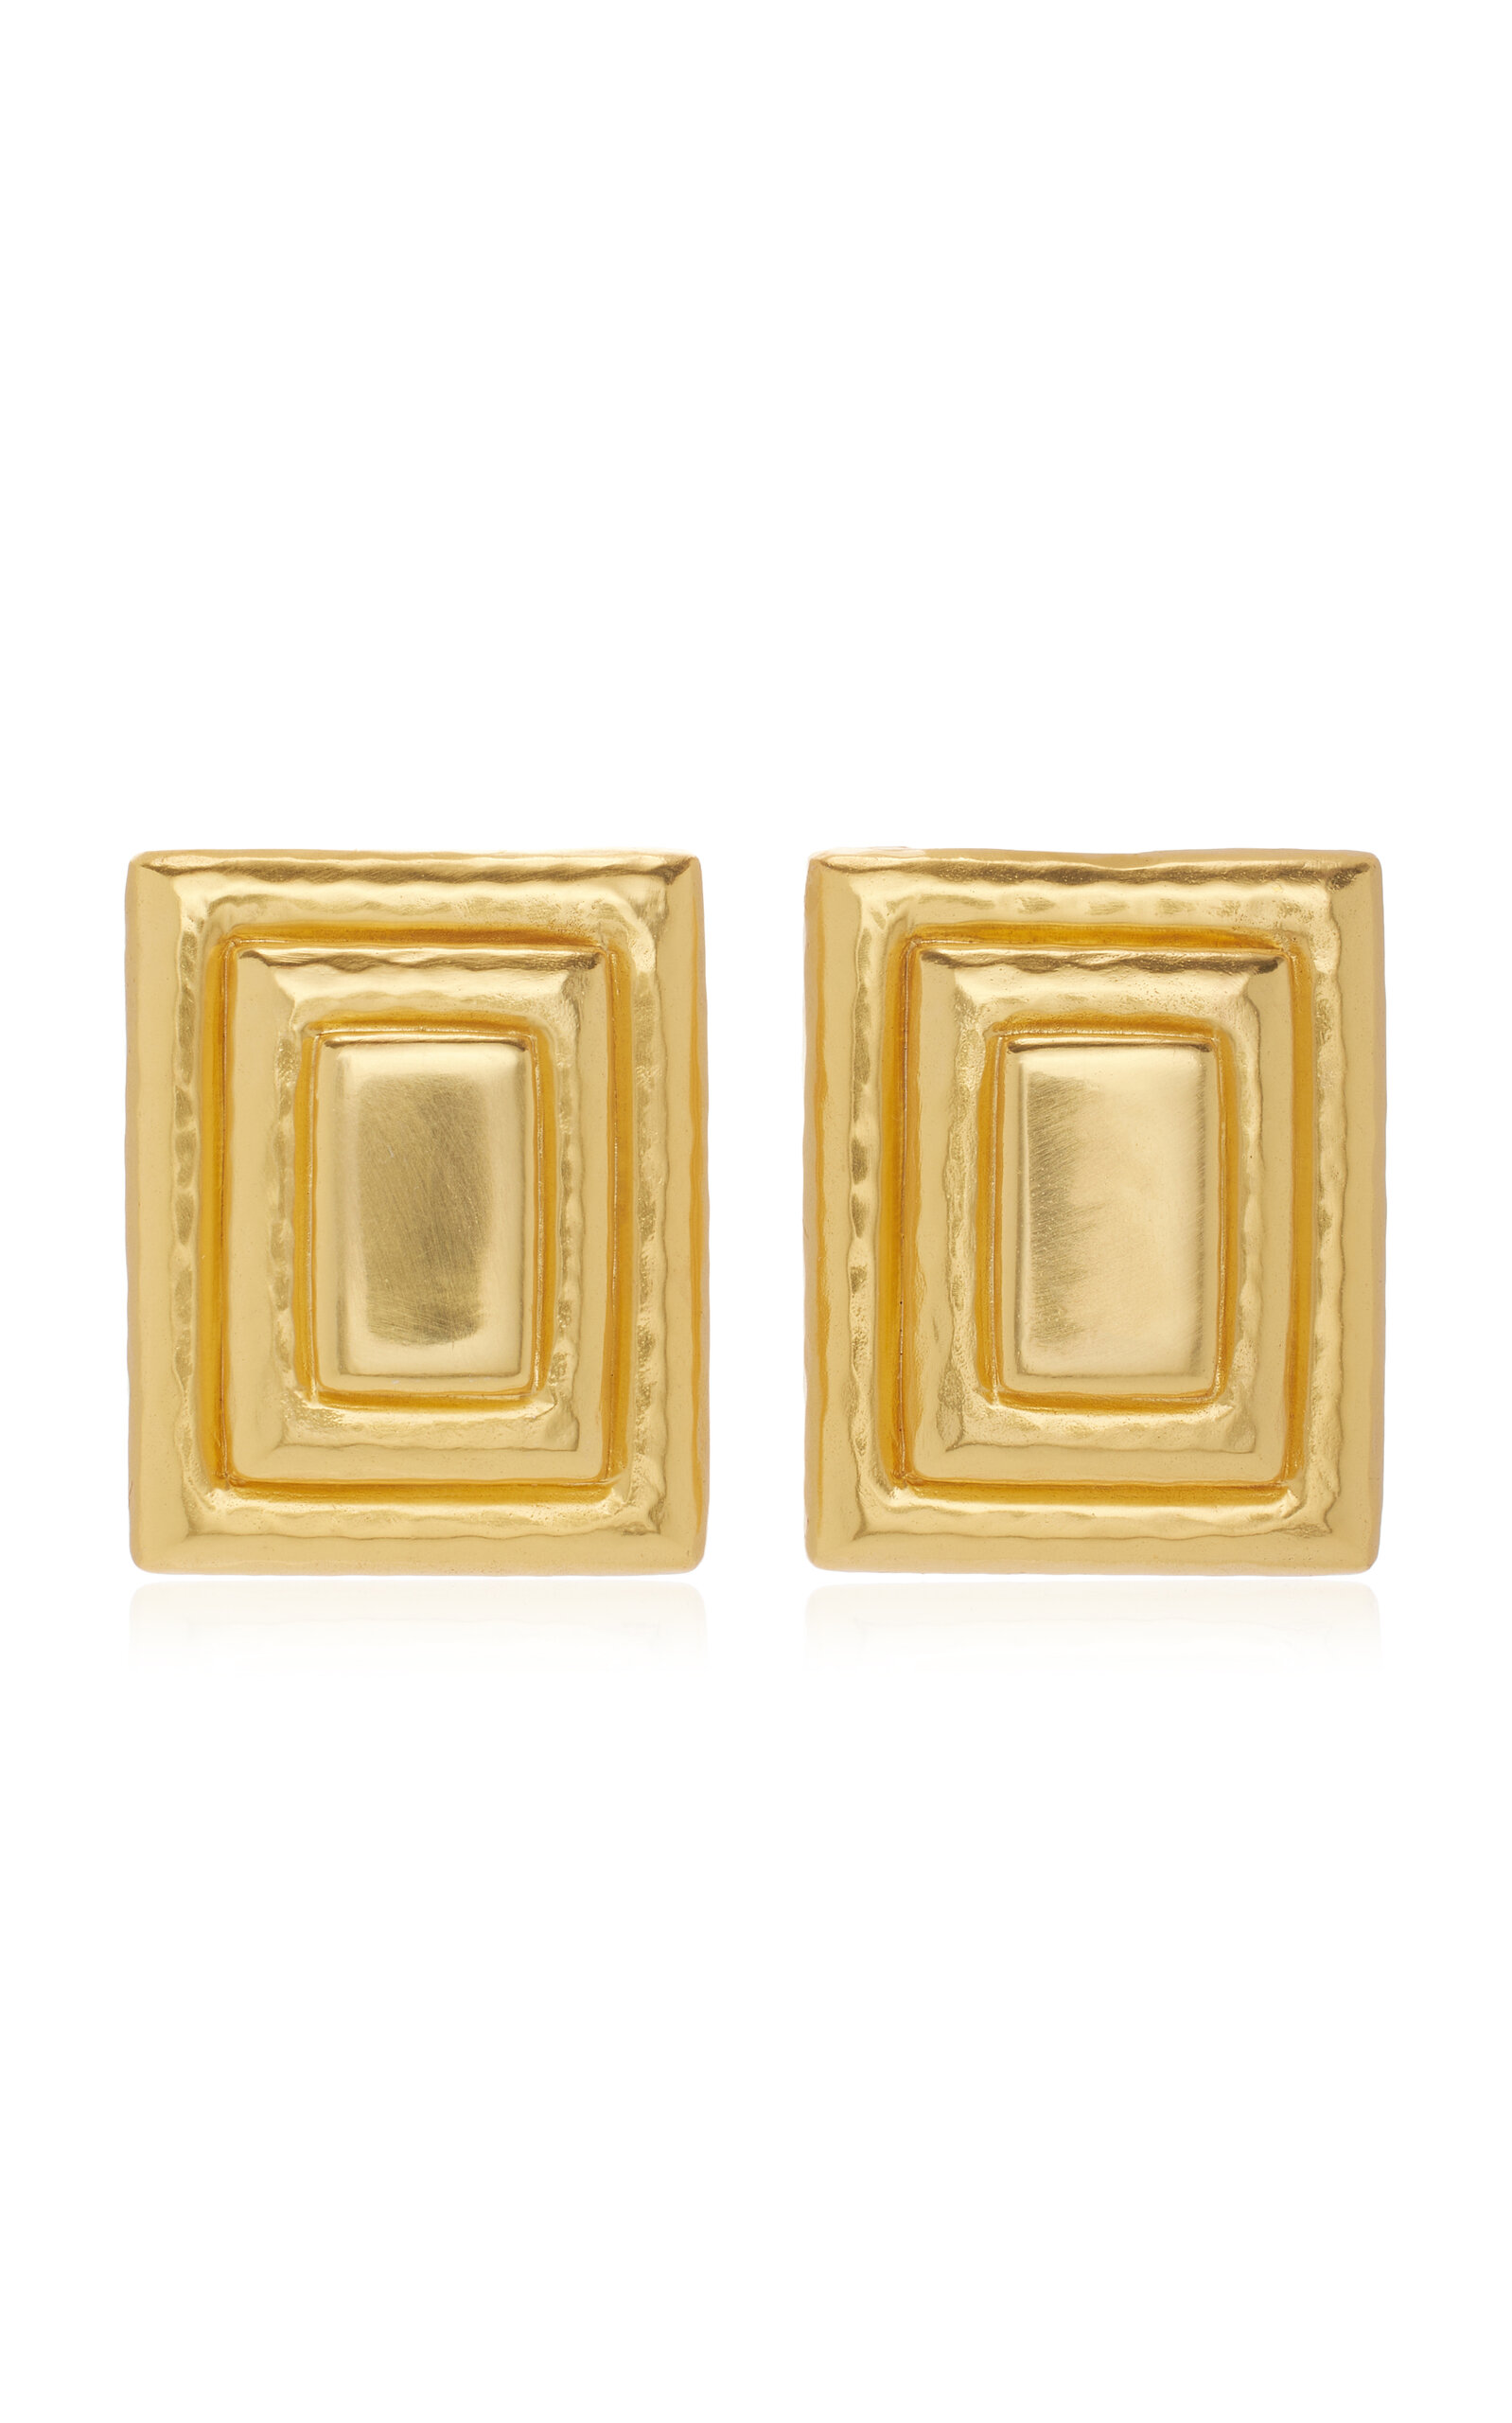 Valére Hailey 24k Gold-plated Earrings